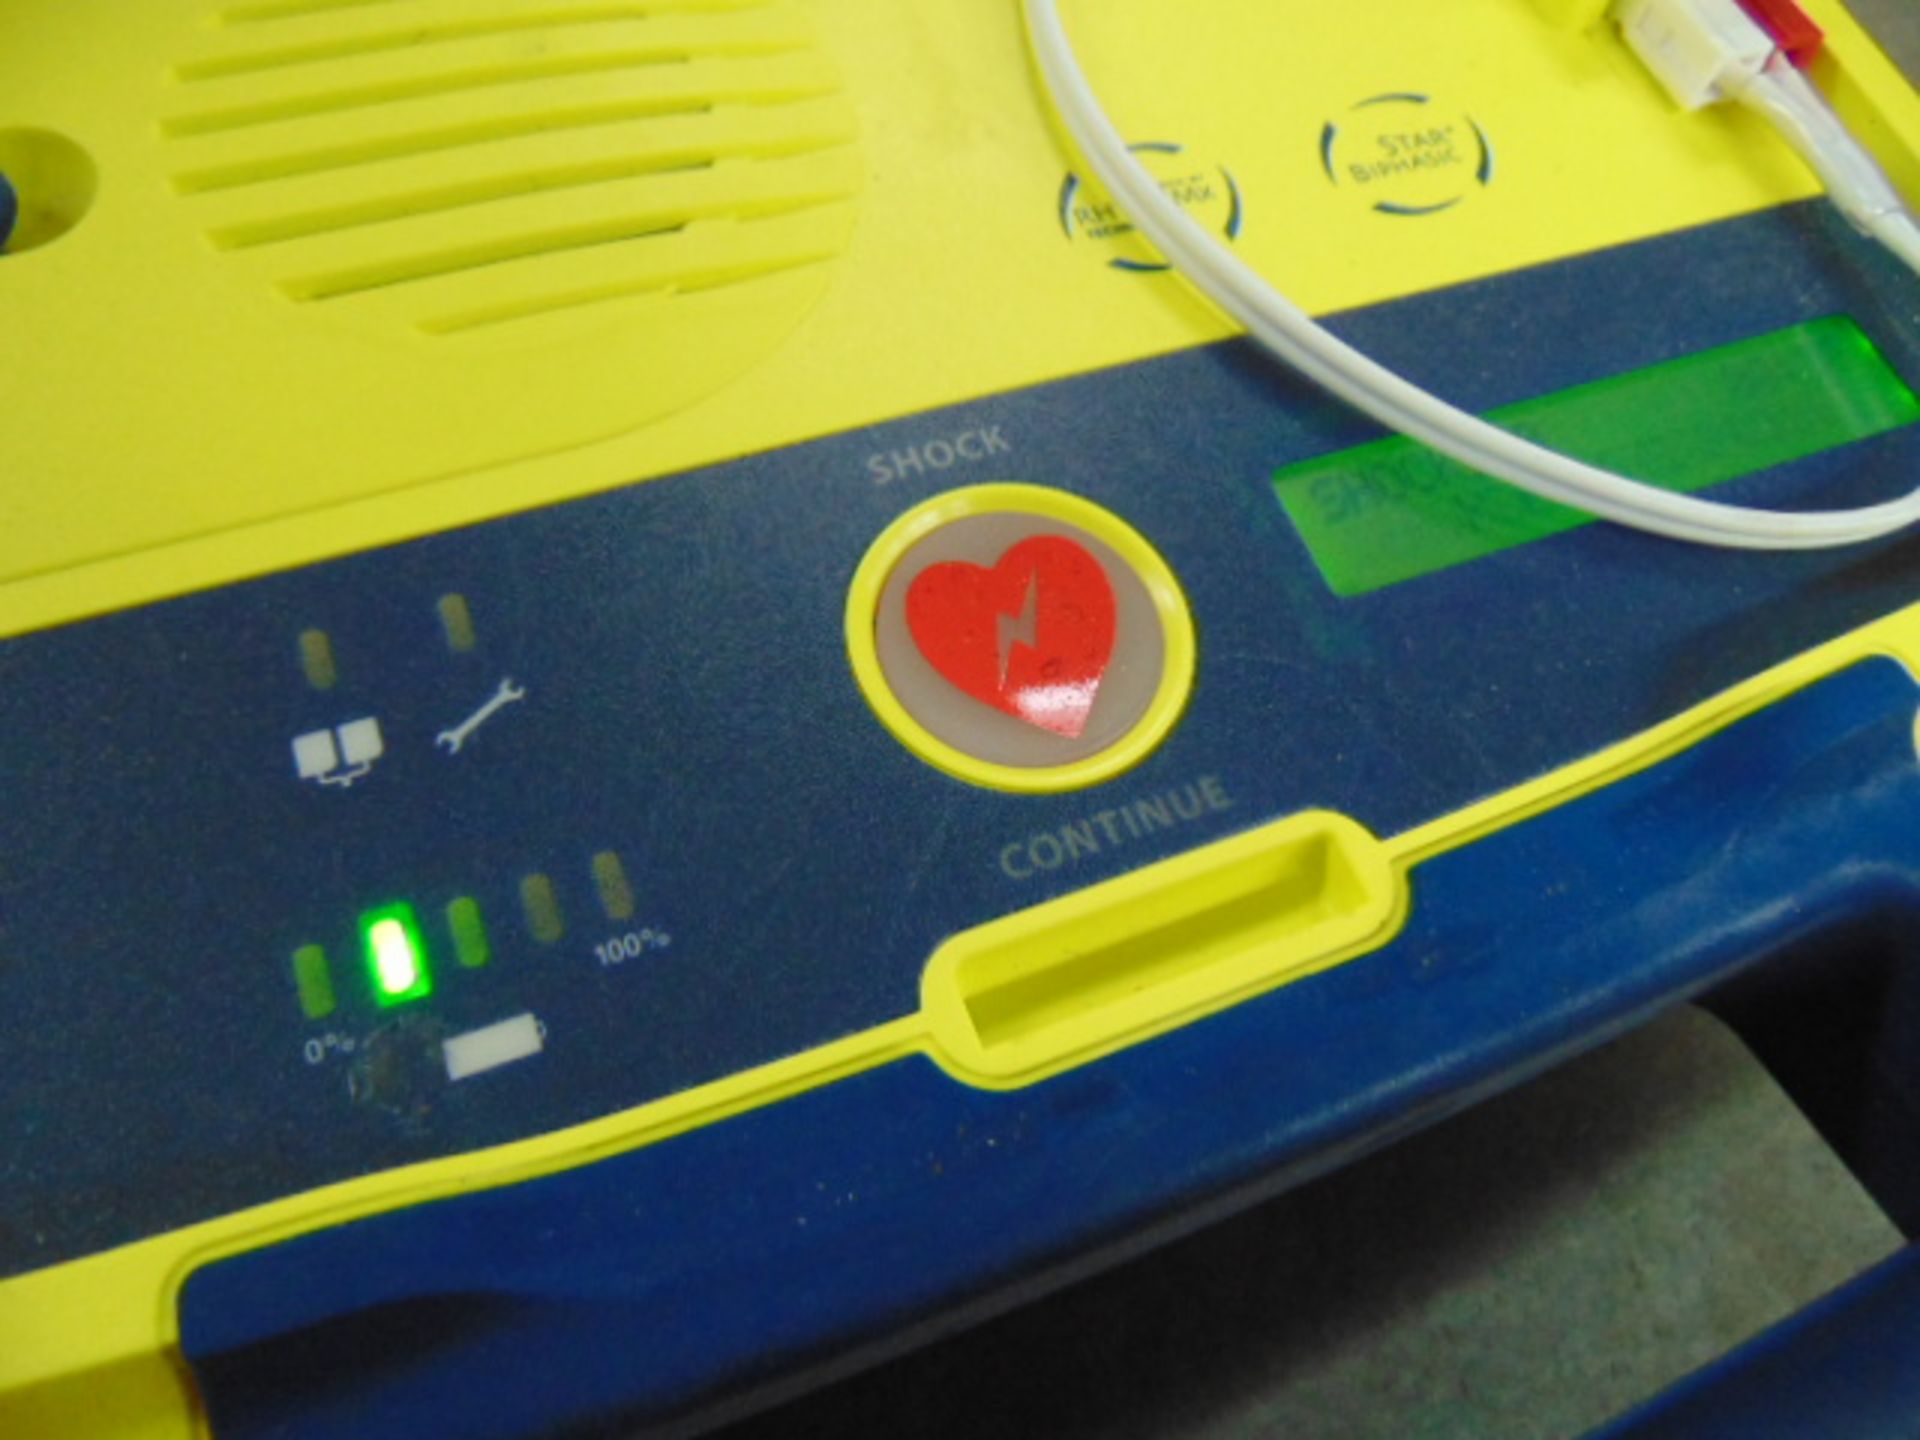 2 x Cardiac Science Powerheart G3 Automatic AED Automatic External Defribrillators - Bild 9 aus 12